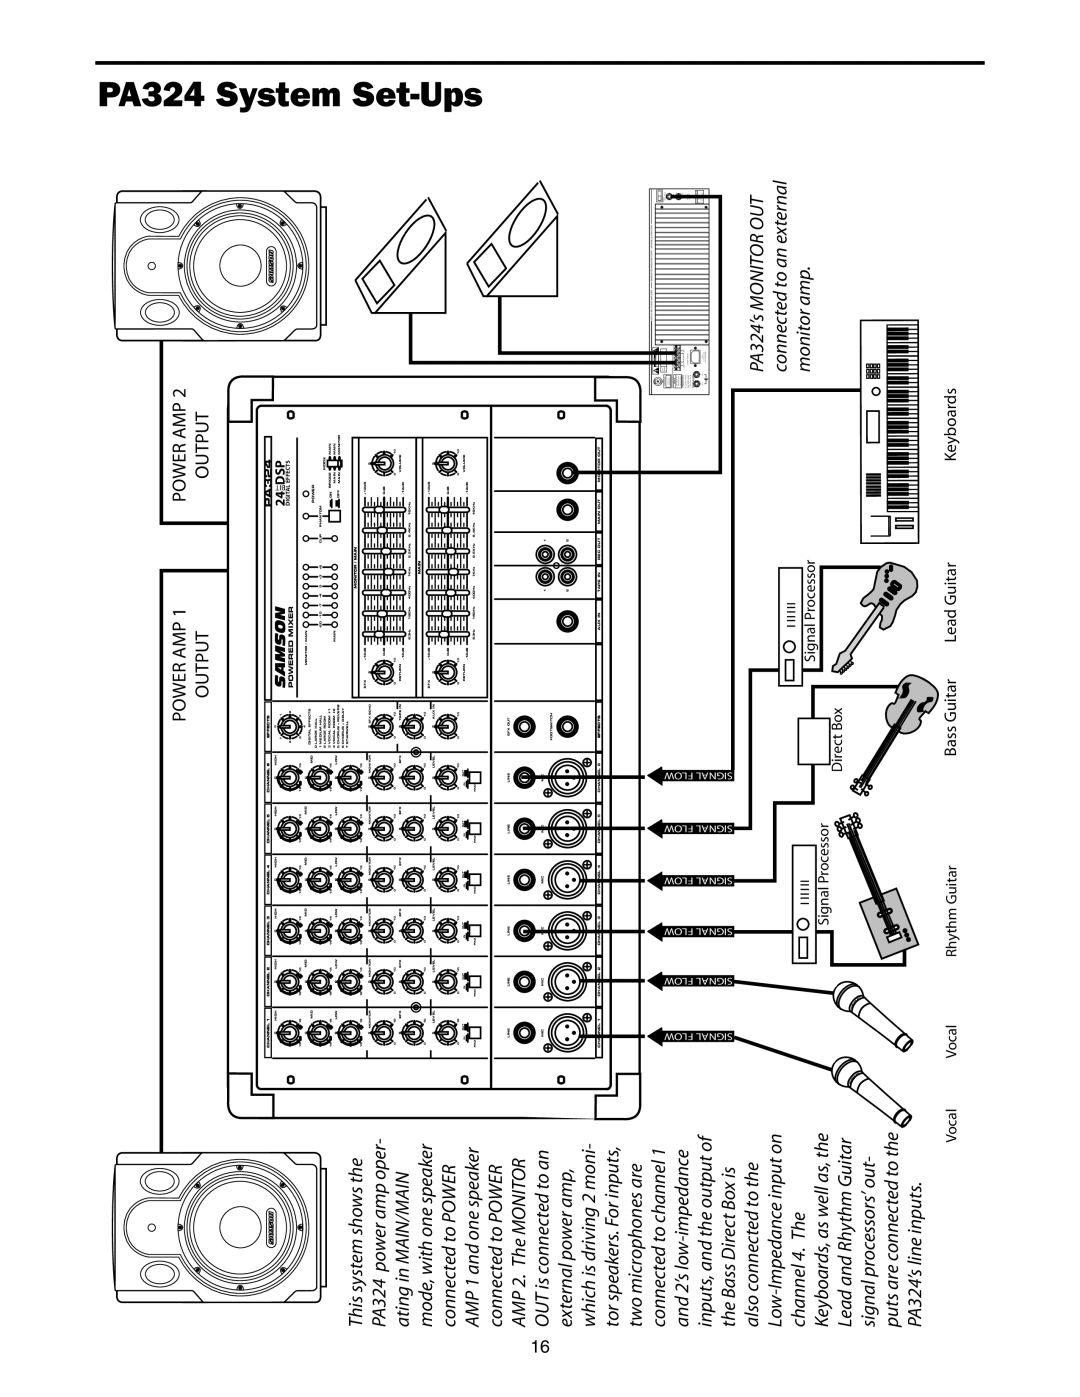 Samson owner manual PA324 System Set-Ups, monitor amp 